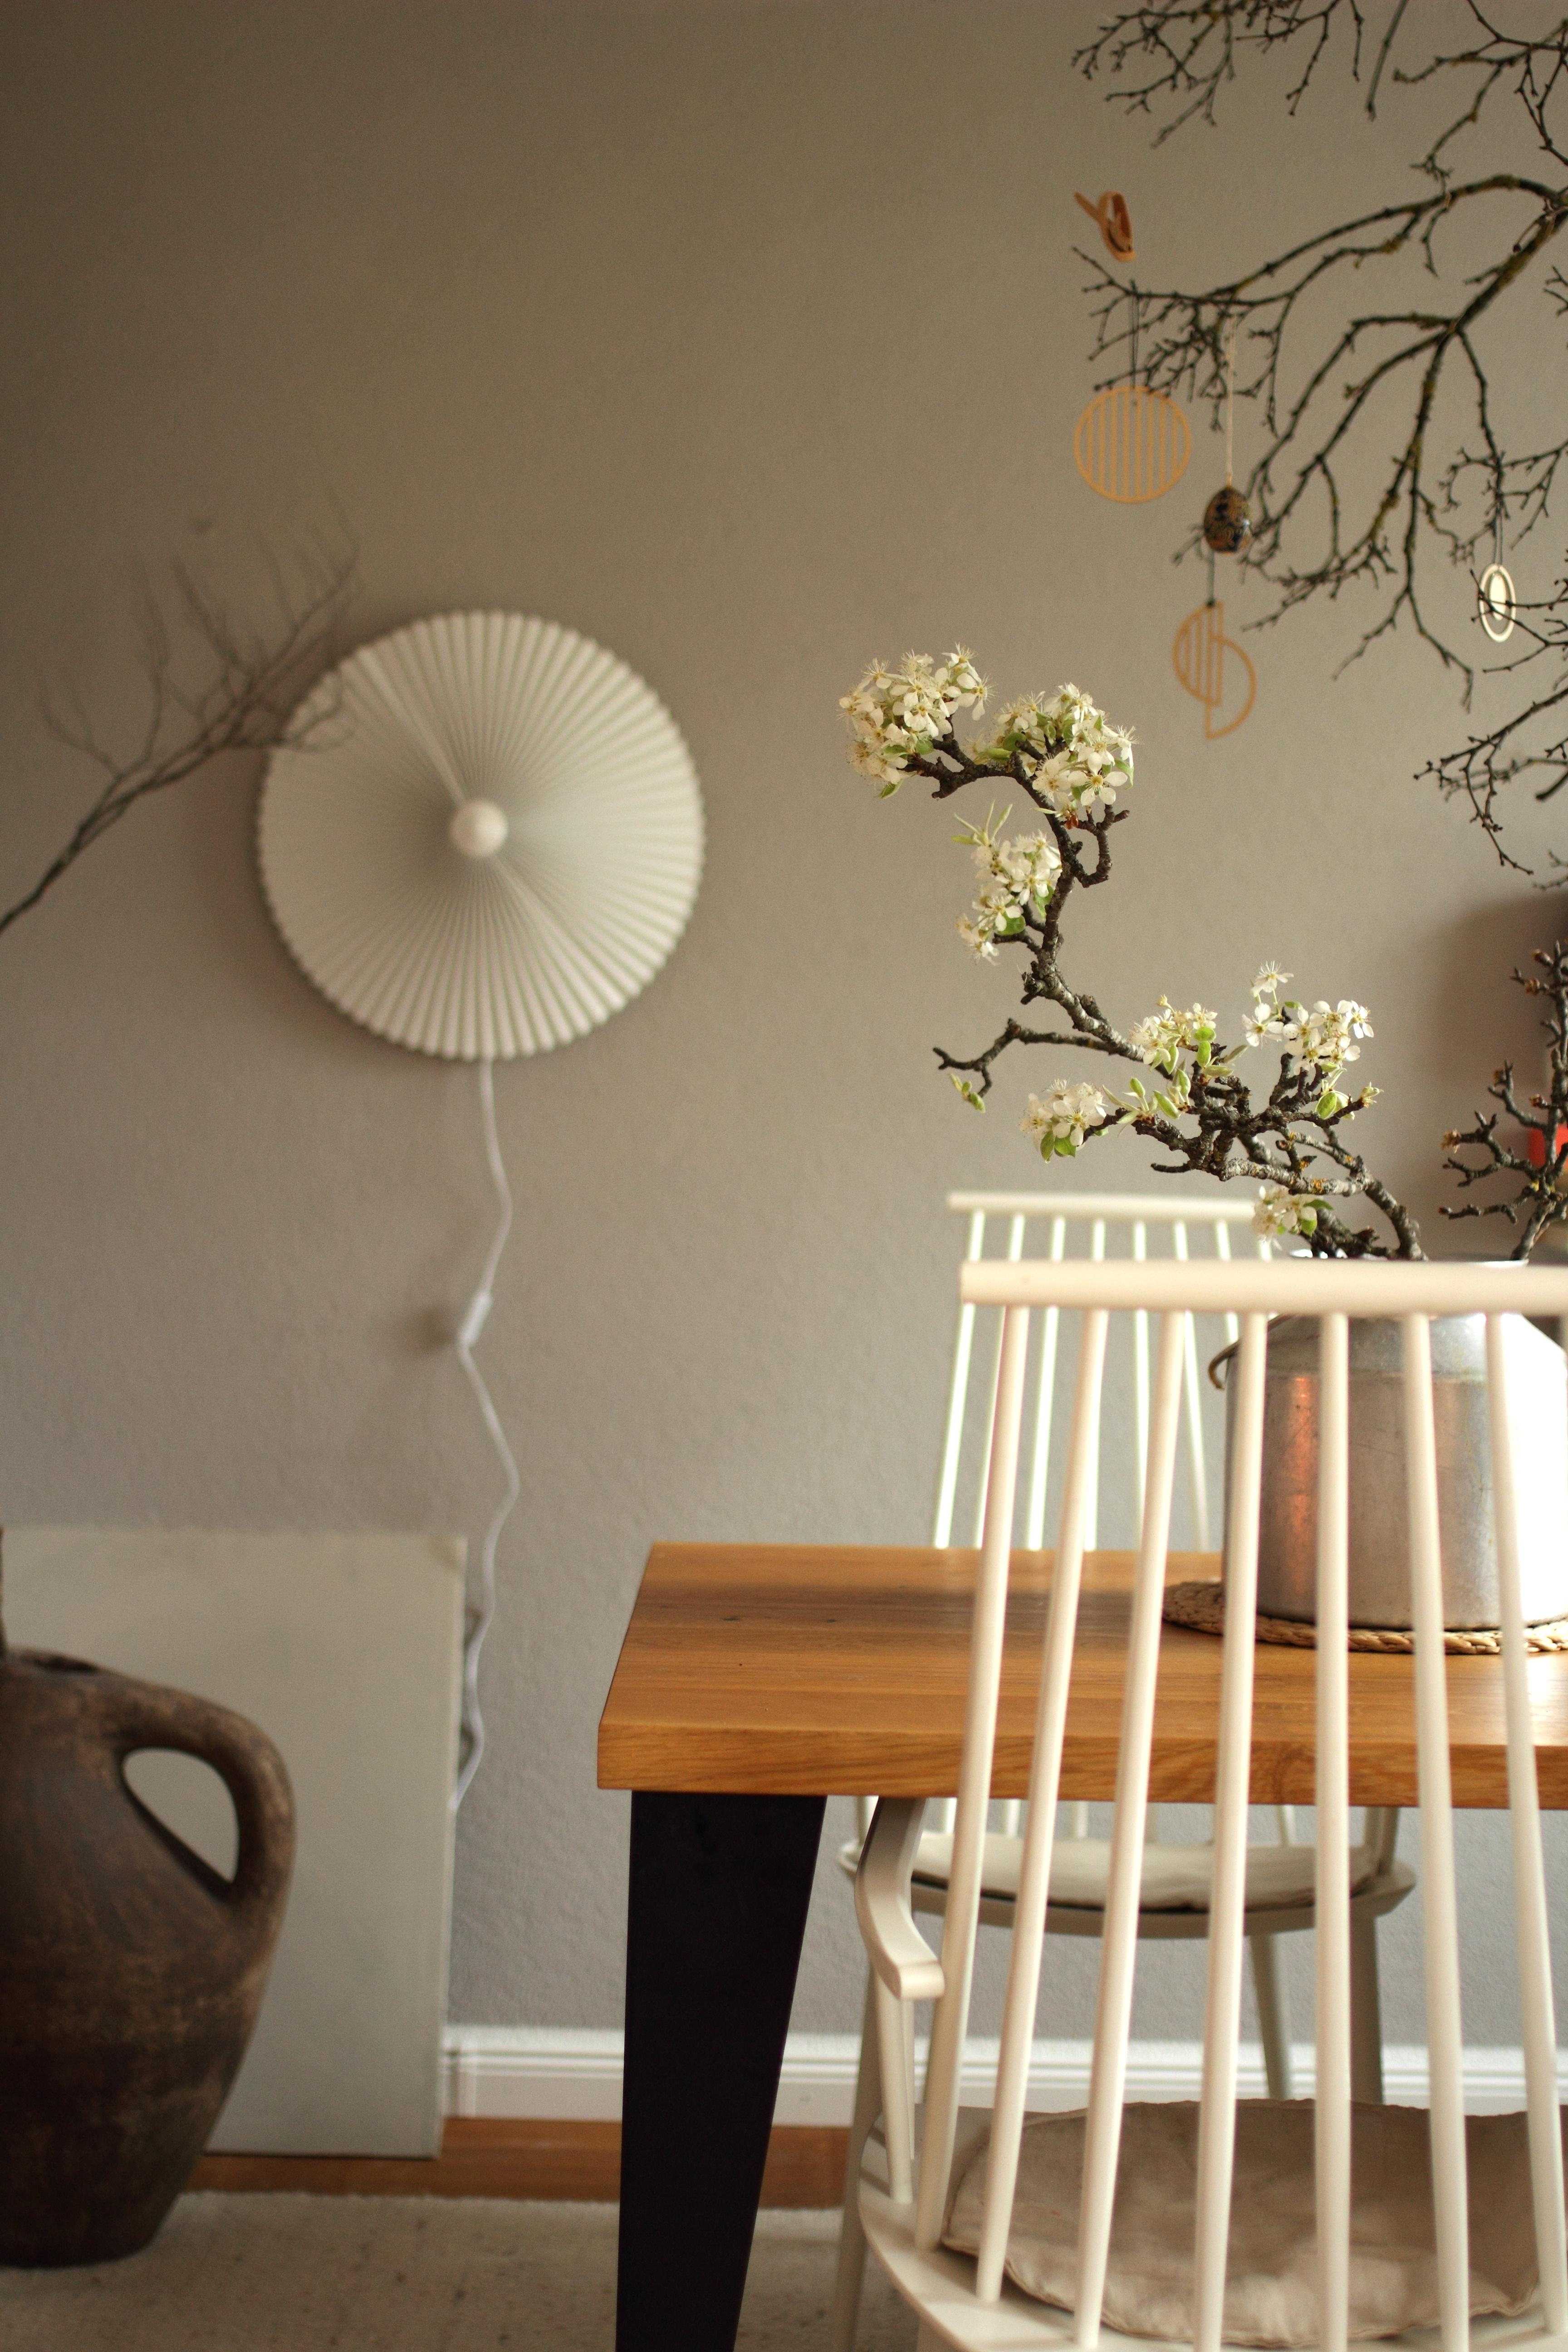 #livingroom #wohnzimmer #interiorinspo #frühling #spring